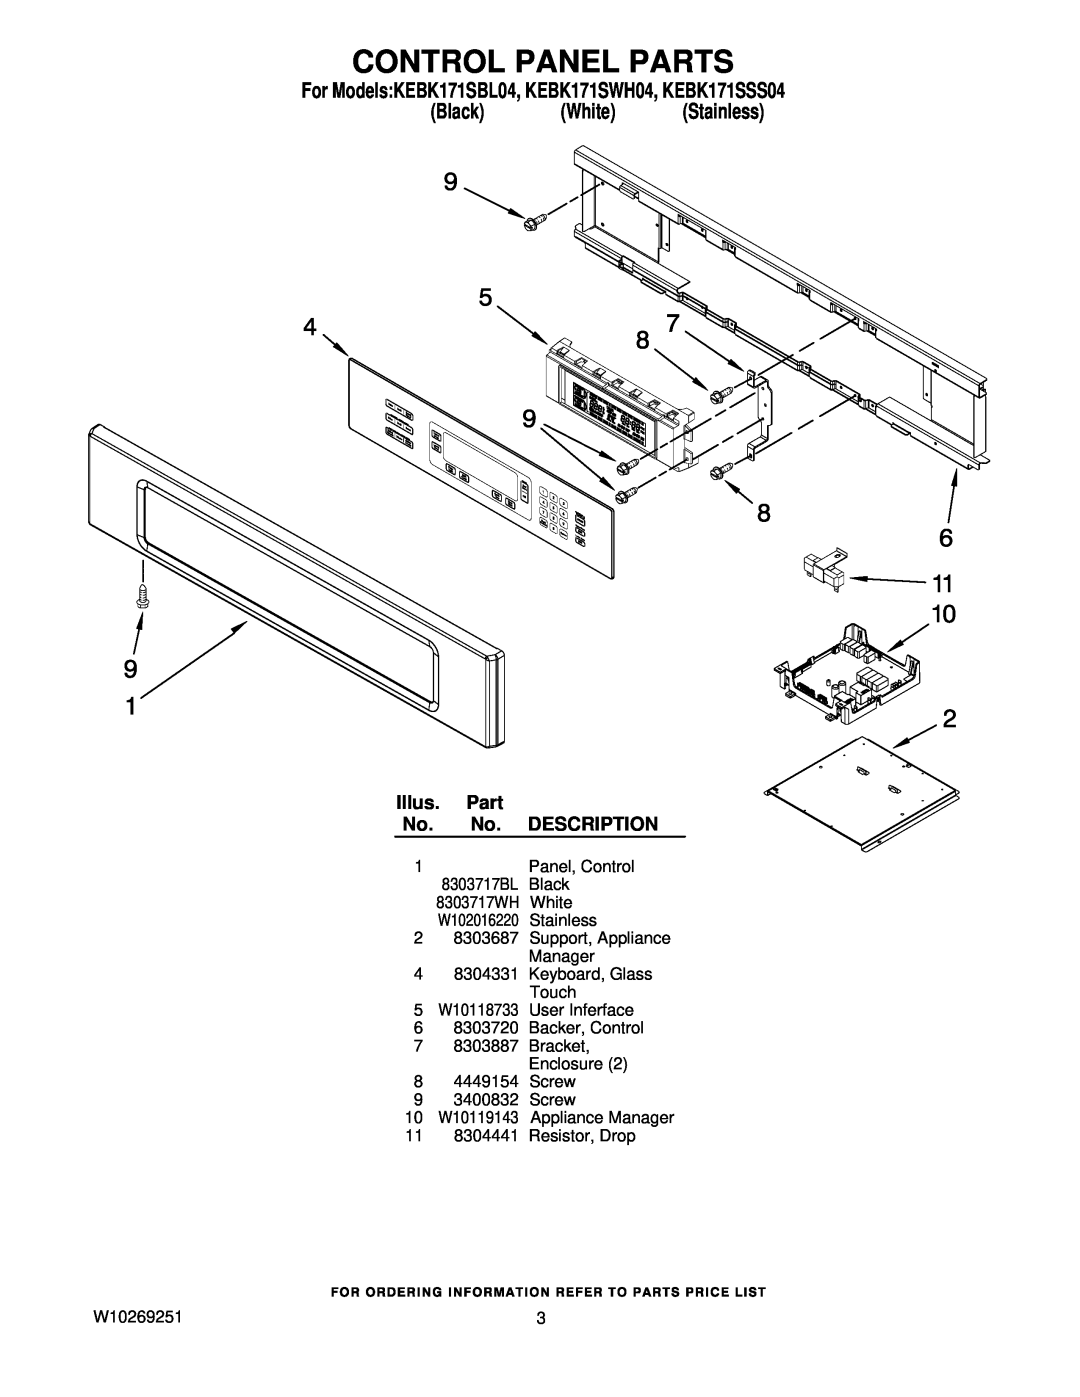 KitchenAid manual Control Panel Parts, Illus, Description, For ModelsKEBK171SBL04, KEBK171SWH04, KEBK171SSS04 